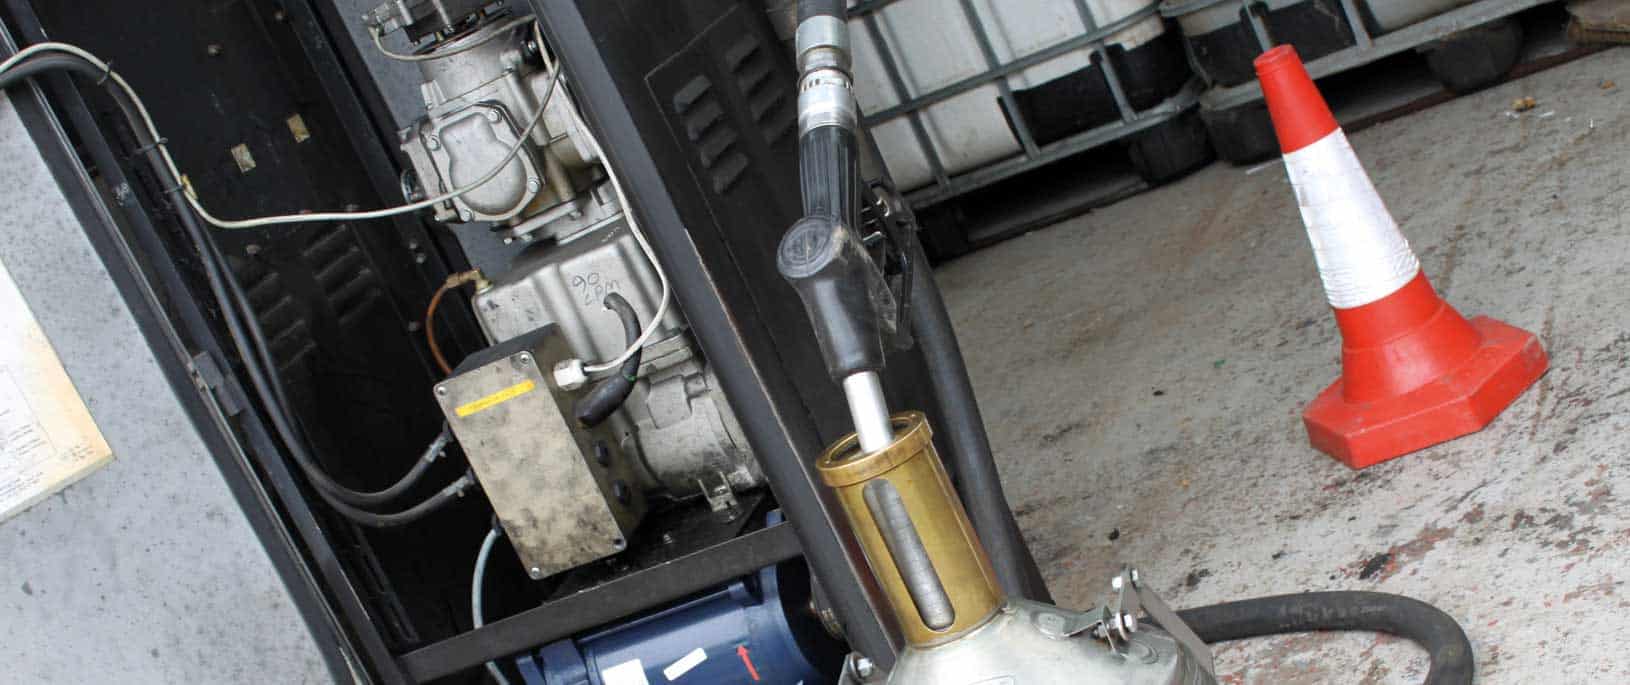 octane fuel tank inspection